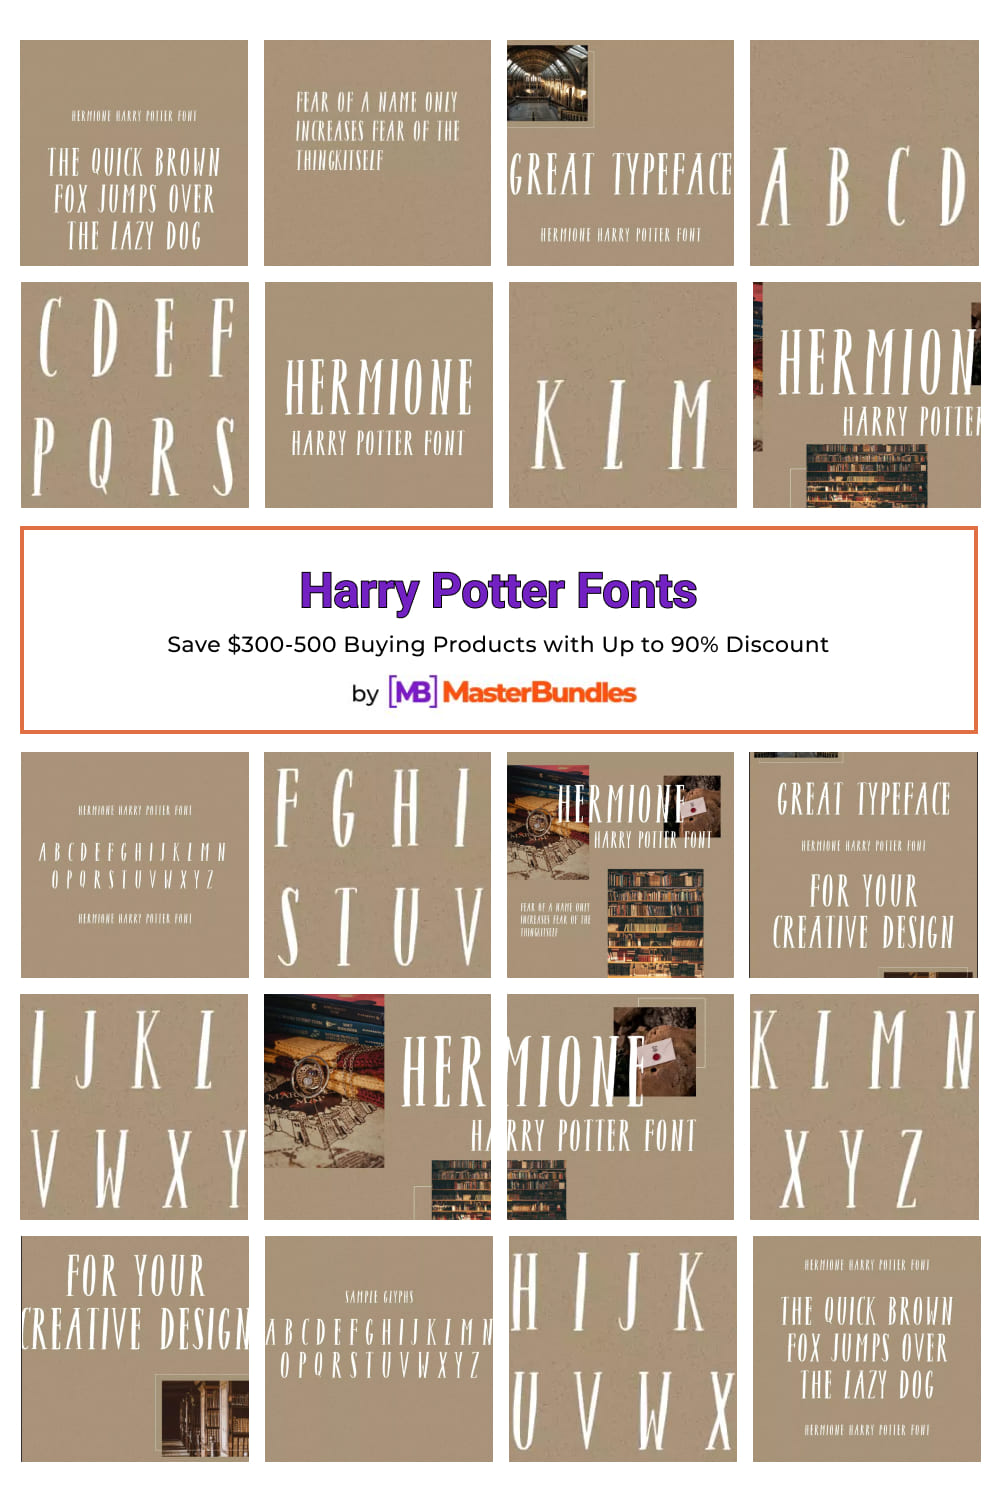 Harry Potter Fonts for Pinterest.